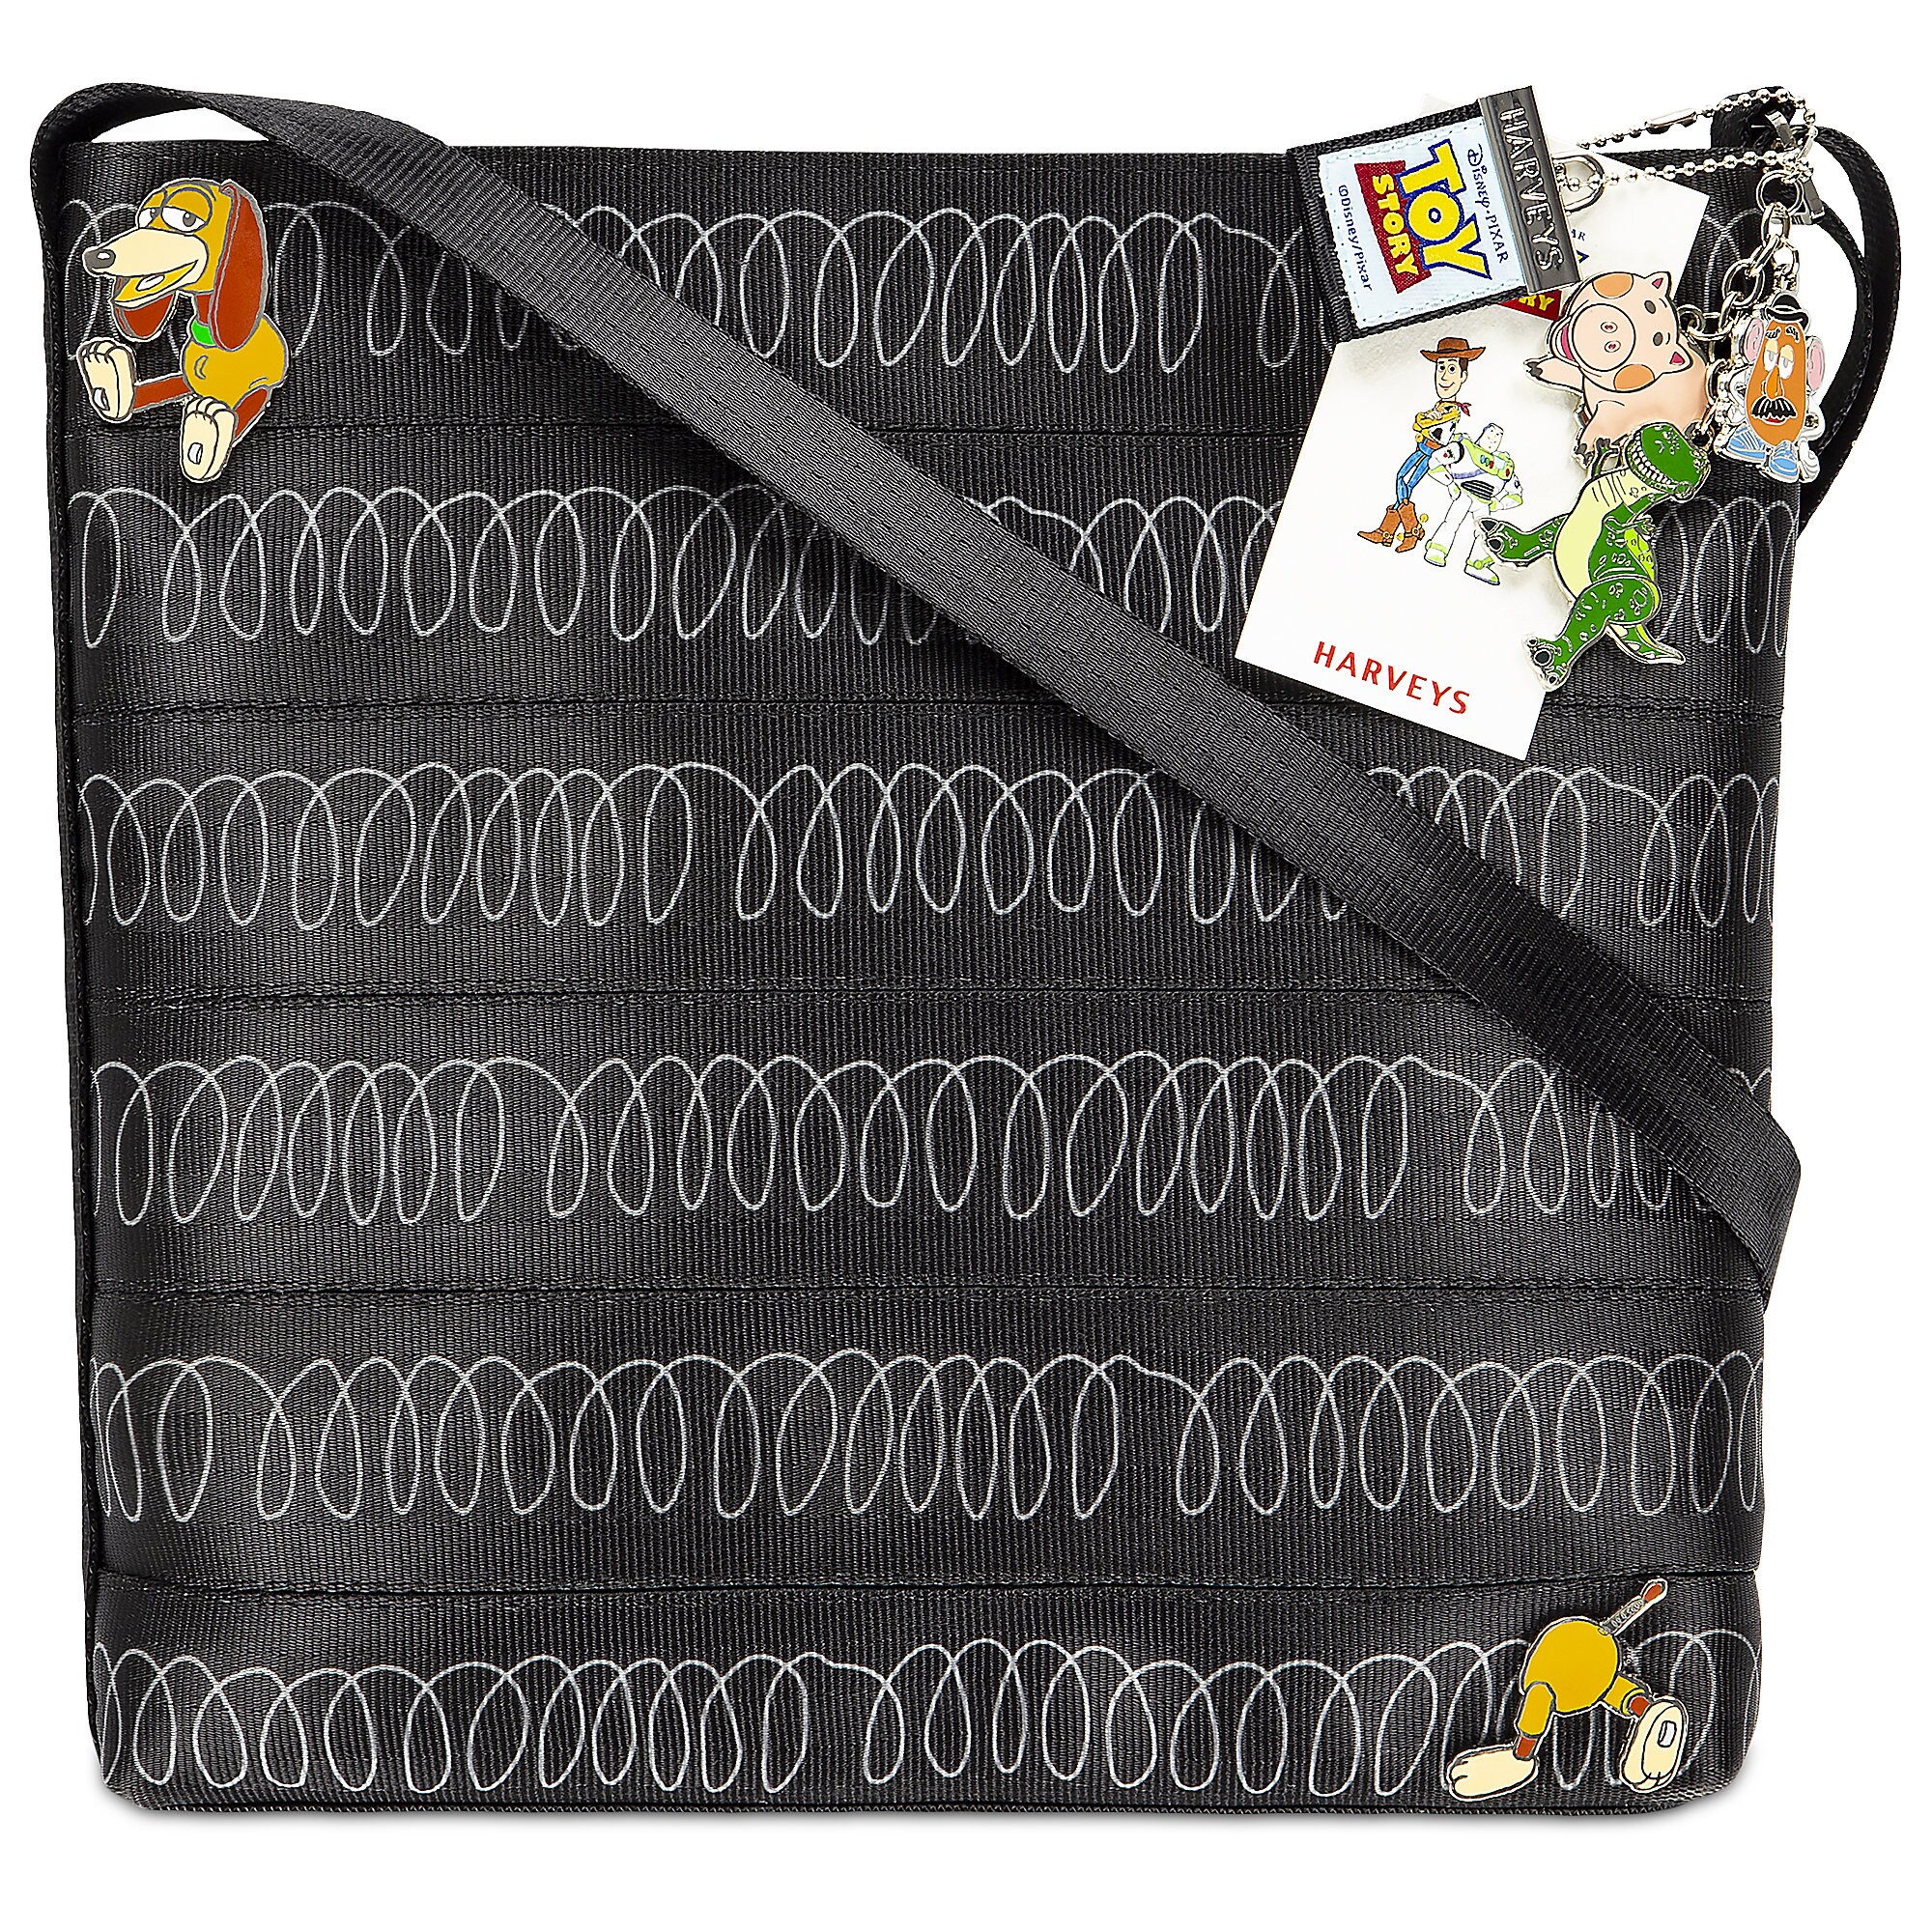 Toy Story Crossbody Bag by Harveys